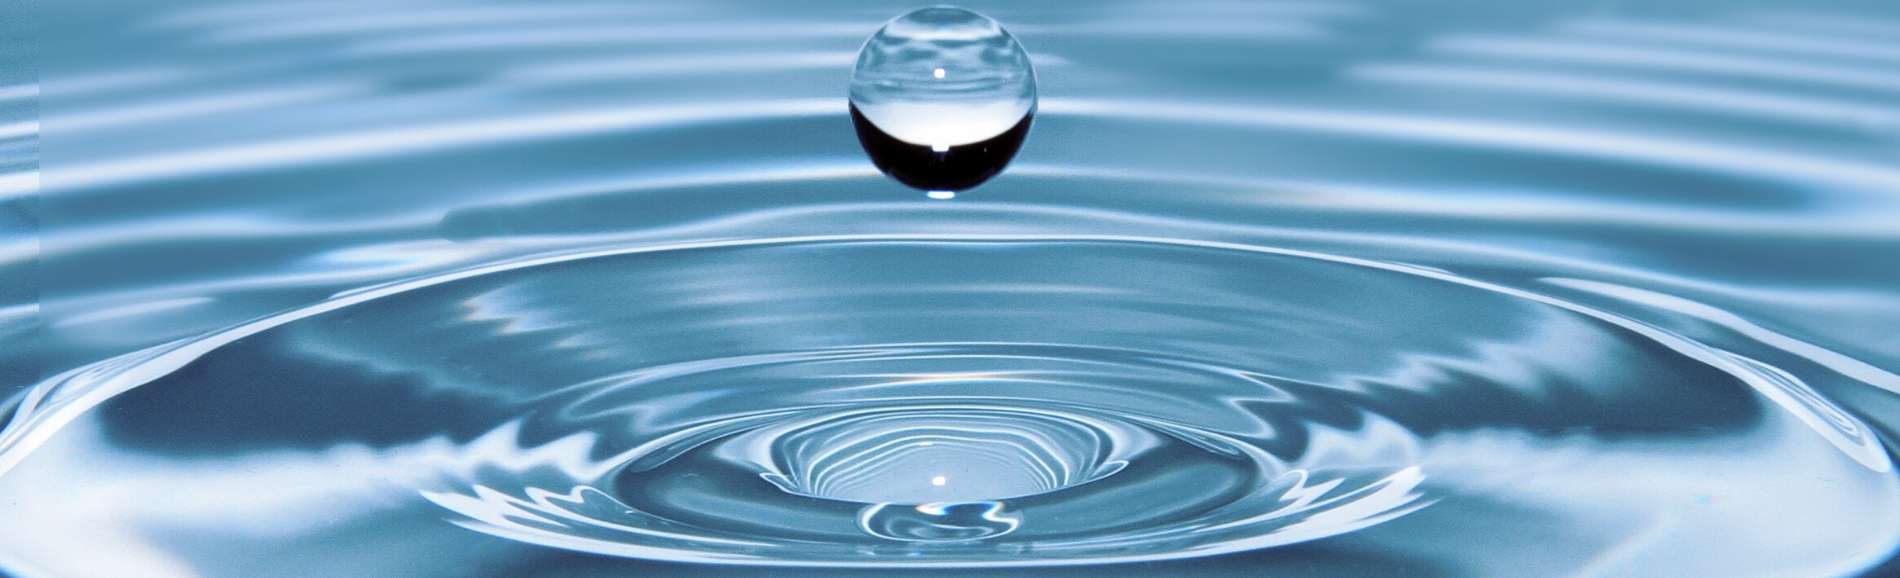 Drop of water splashing in a large pool of water